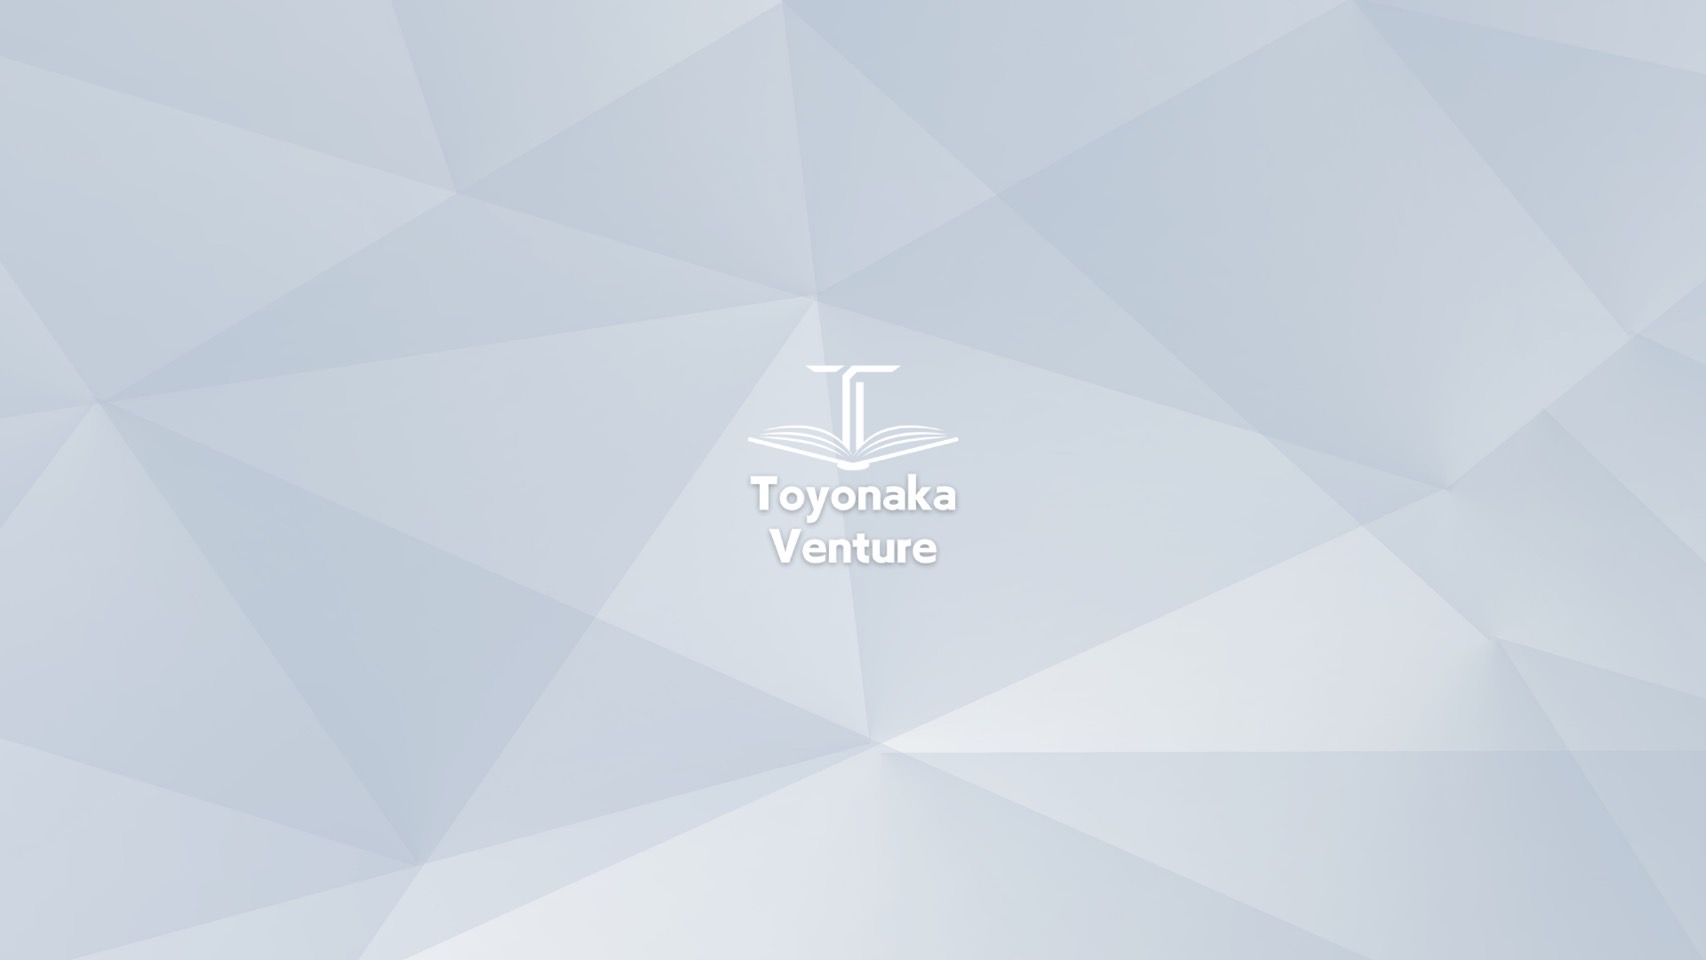 Toyonaka Venture